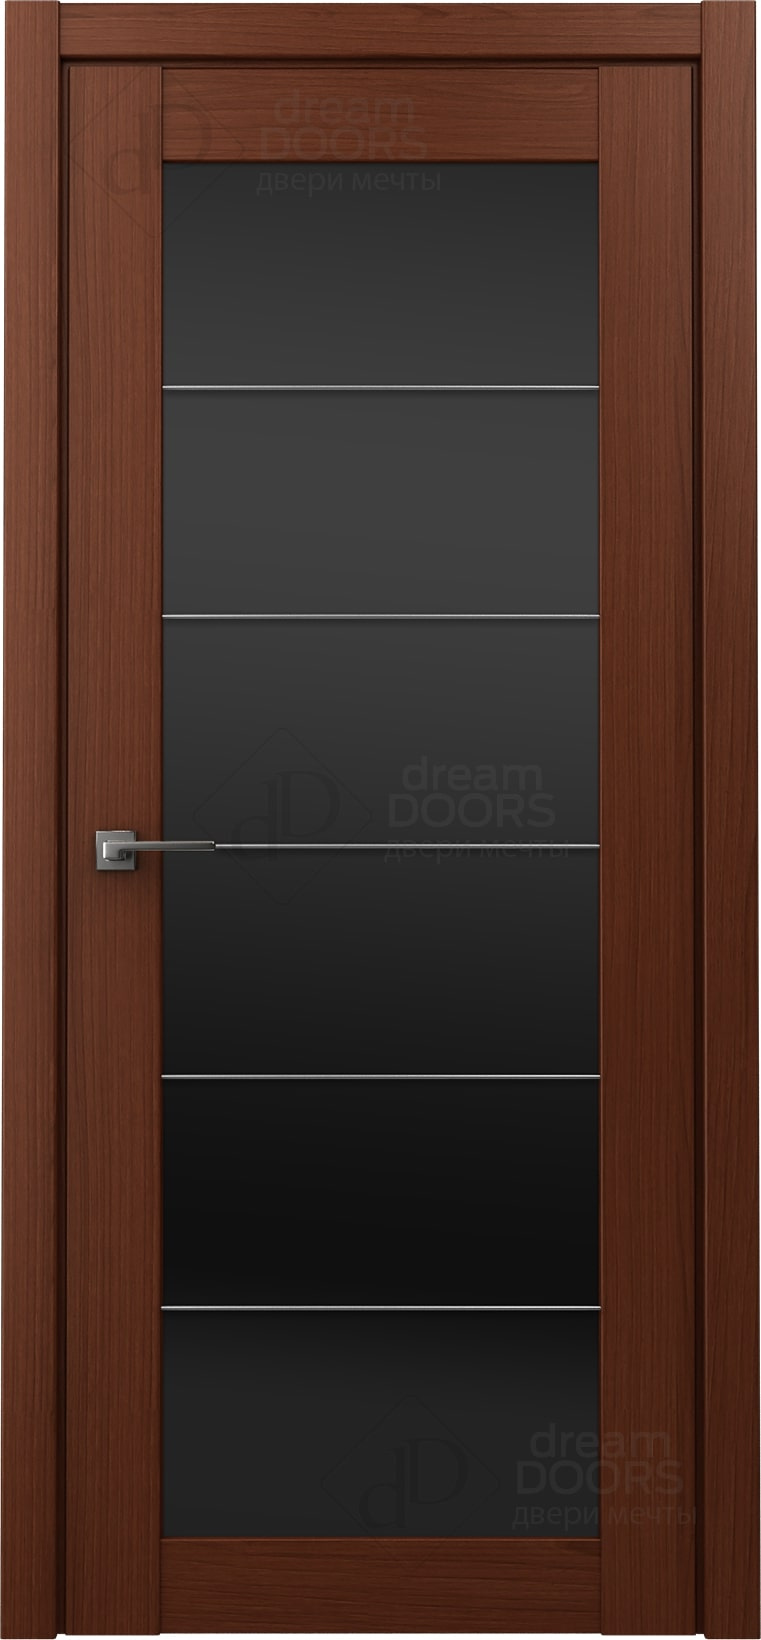 Dream Doors Межкомнатная дверь Престиж с молдингом ПО, арт. 16437 - фото №18